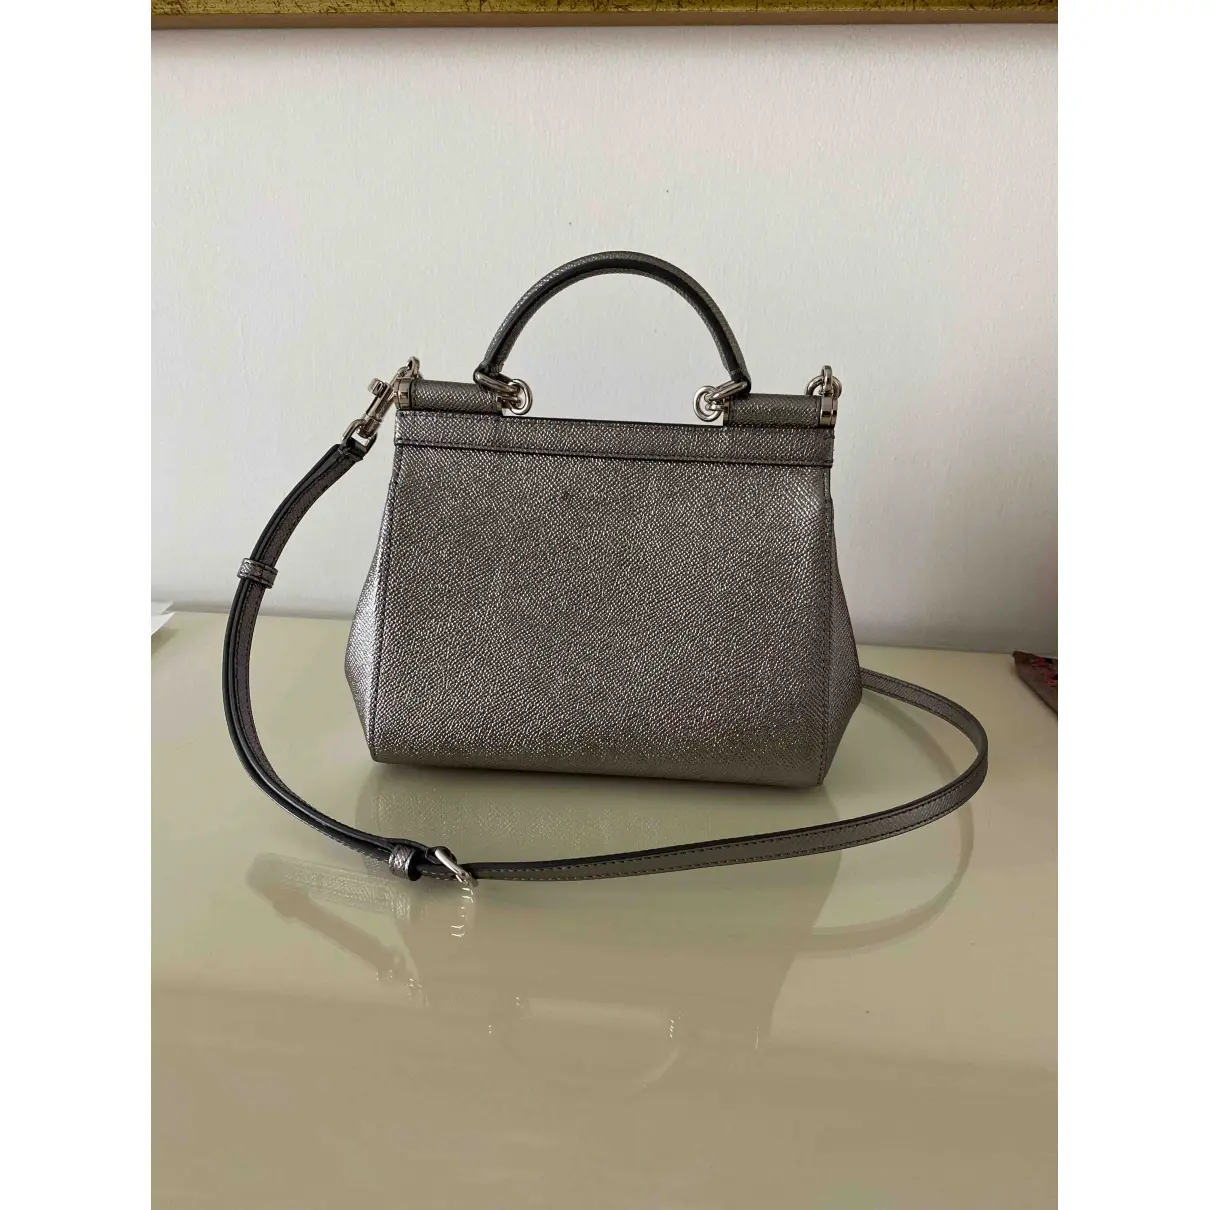 Buy Dolce & Gabbana Sicily leather crossbody bag online